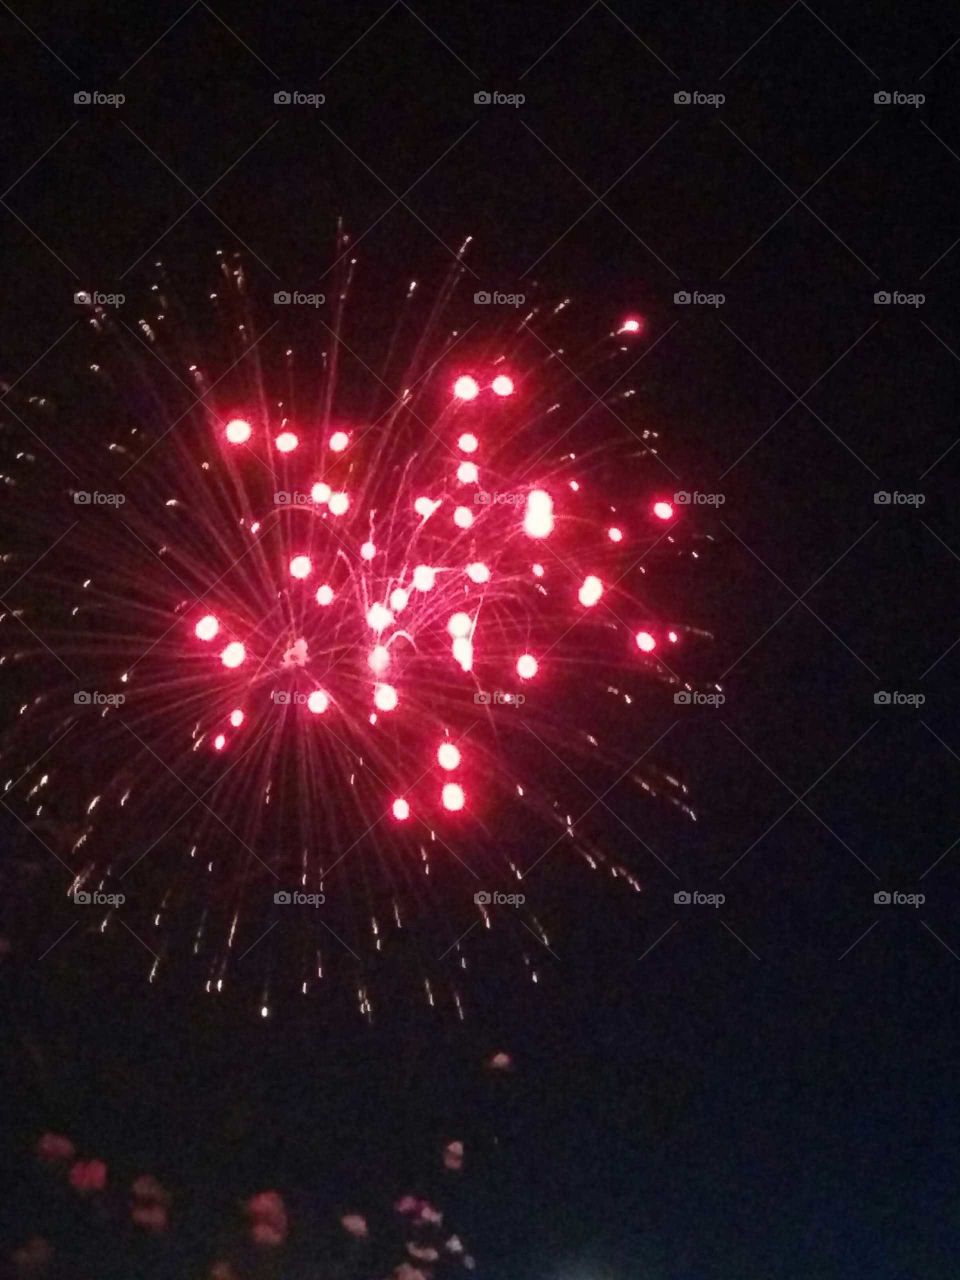 Red burst. 4th of July 2014 fireworks taken in Jackson, AL.